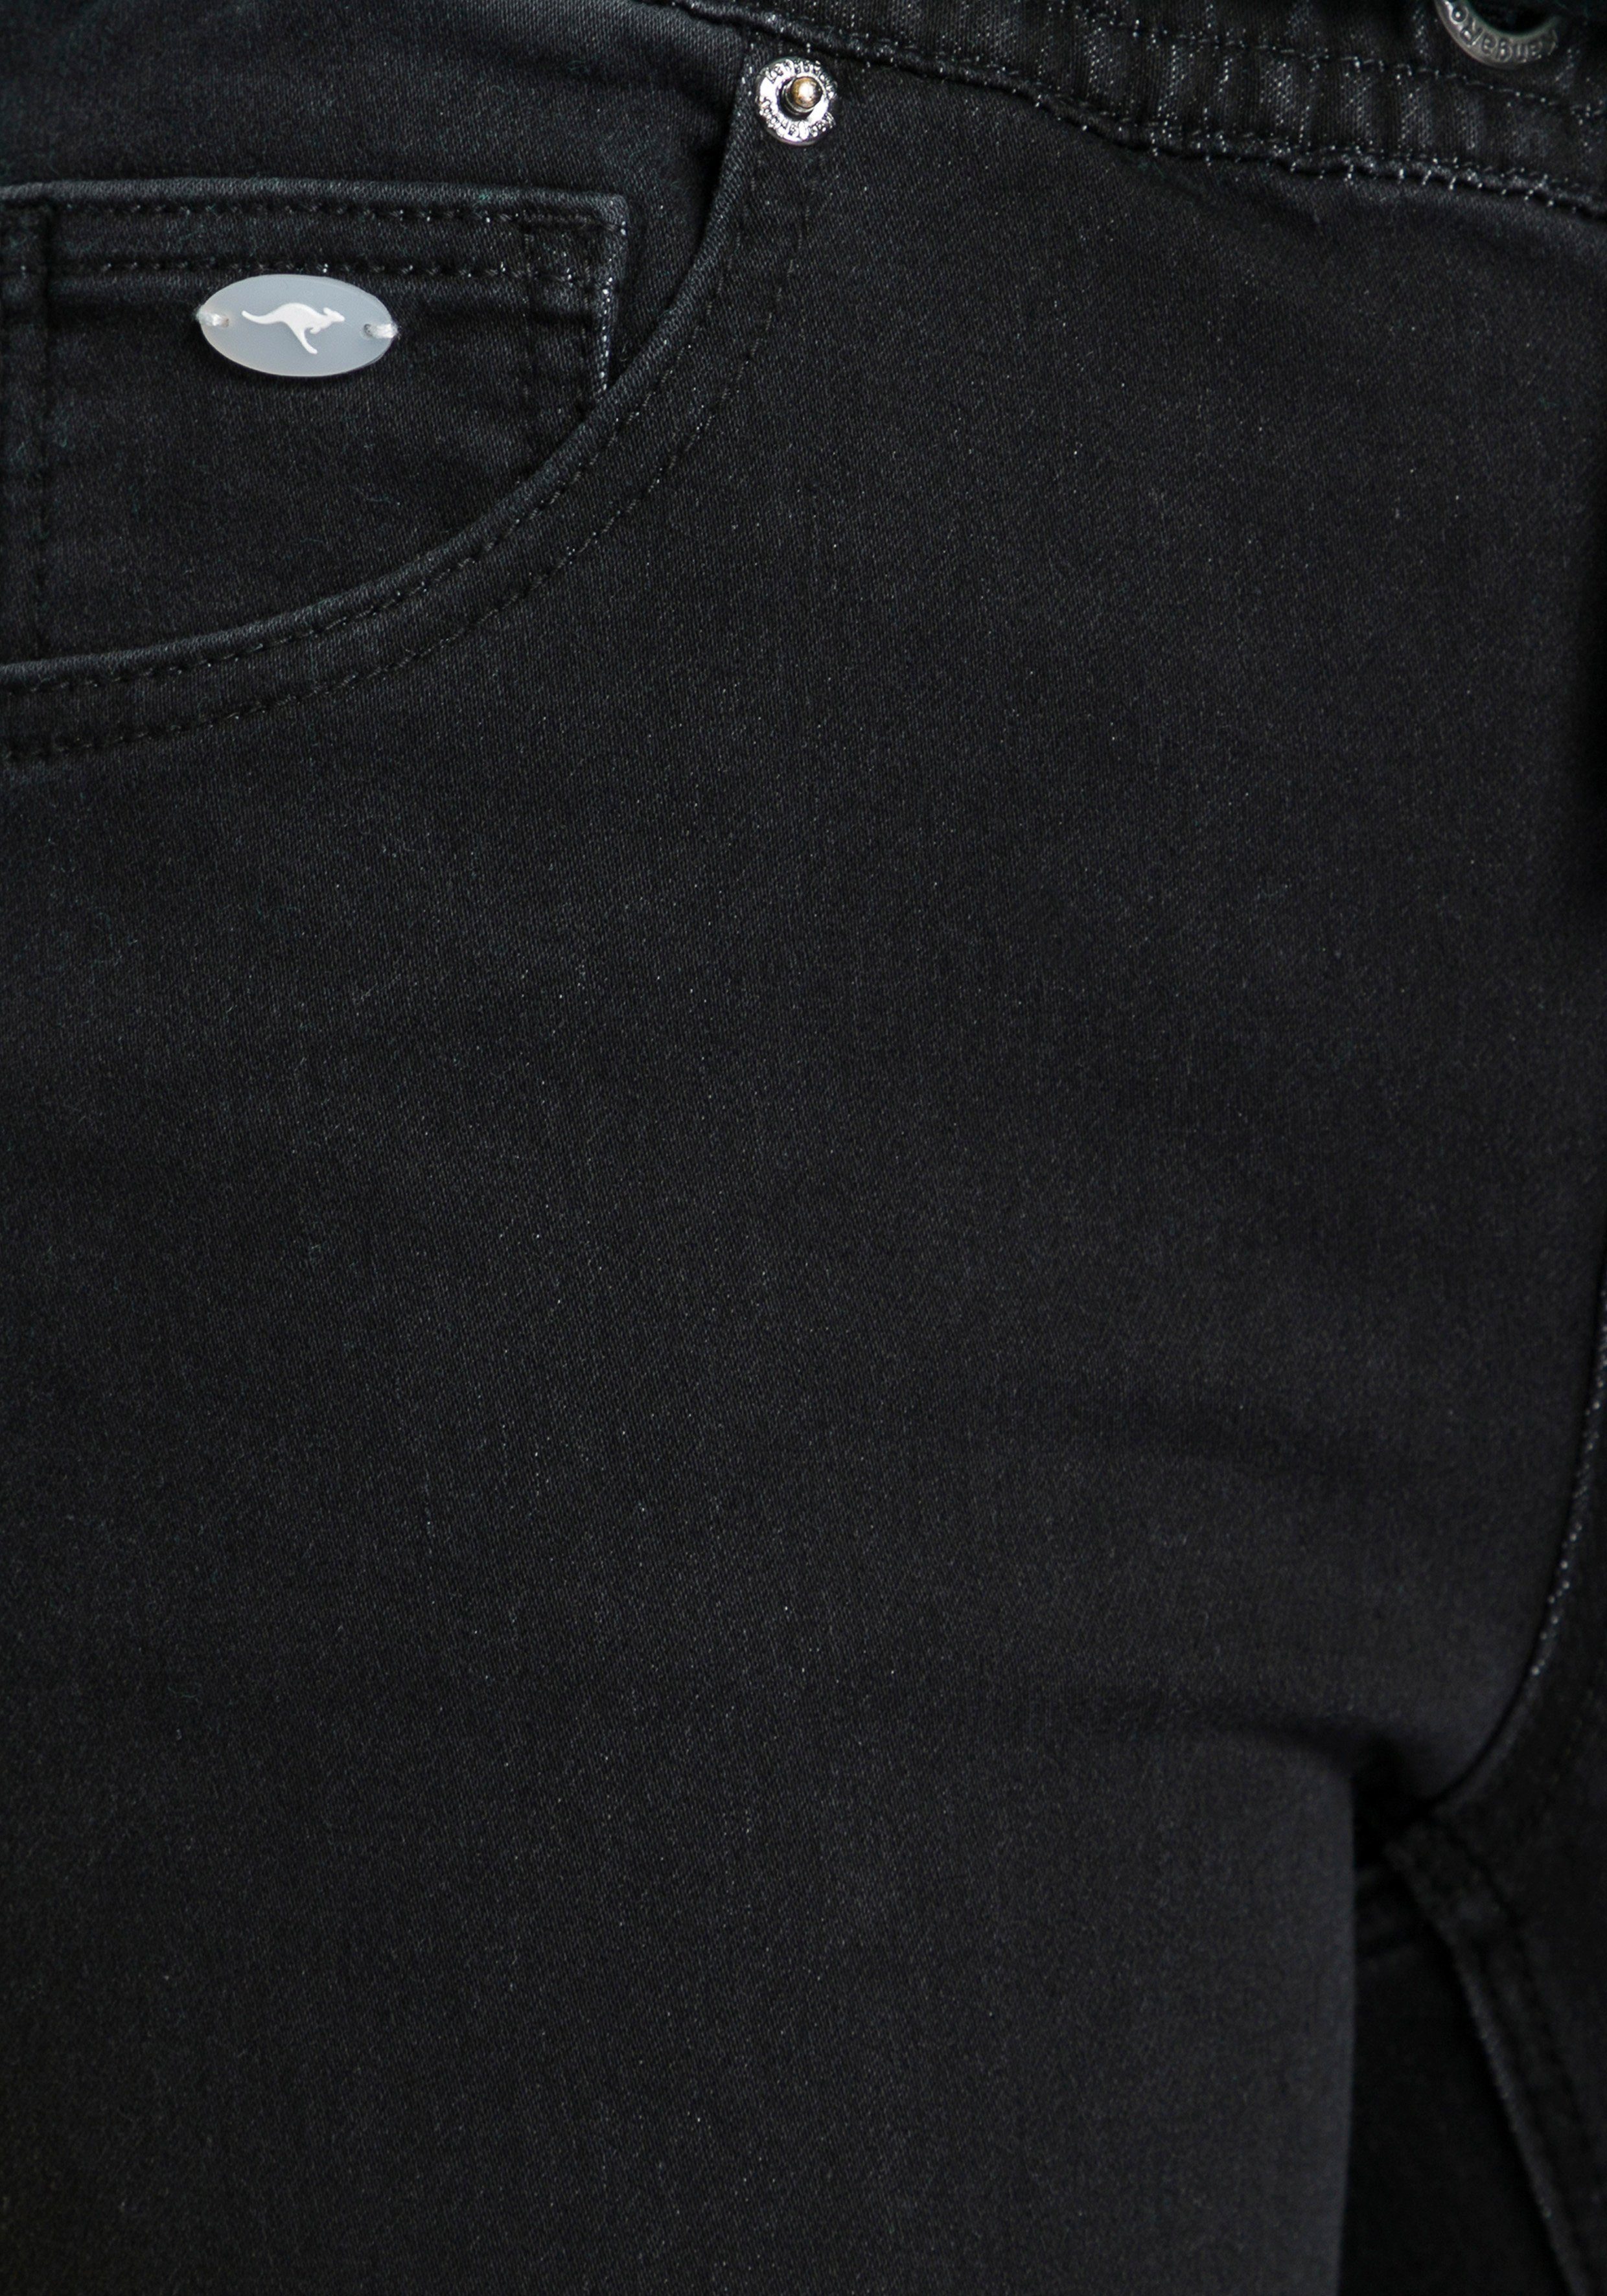 KangaROOS Bündchen Pants in Denim-Optik mit schwarz Jogg elastischem